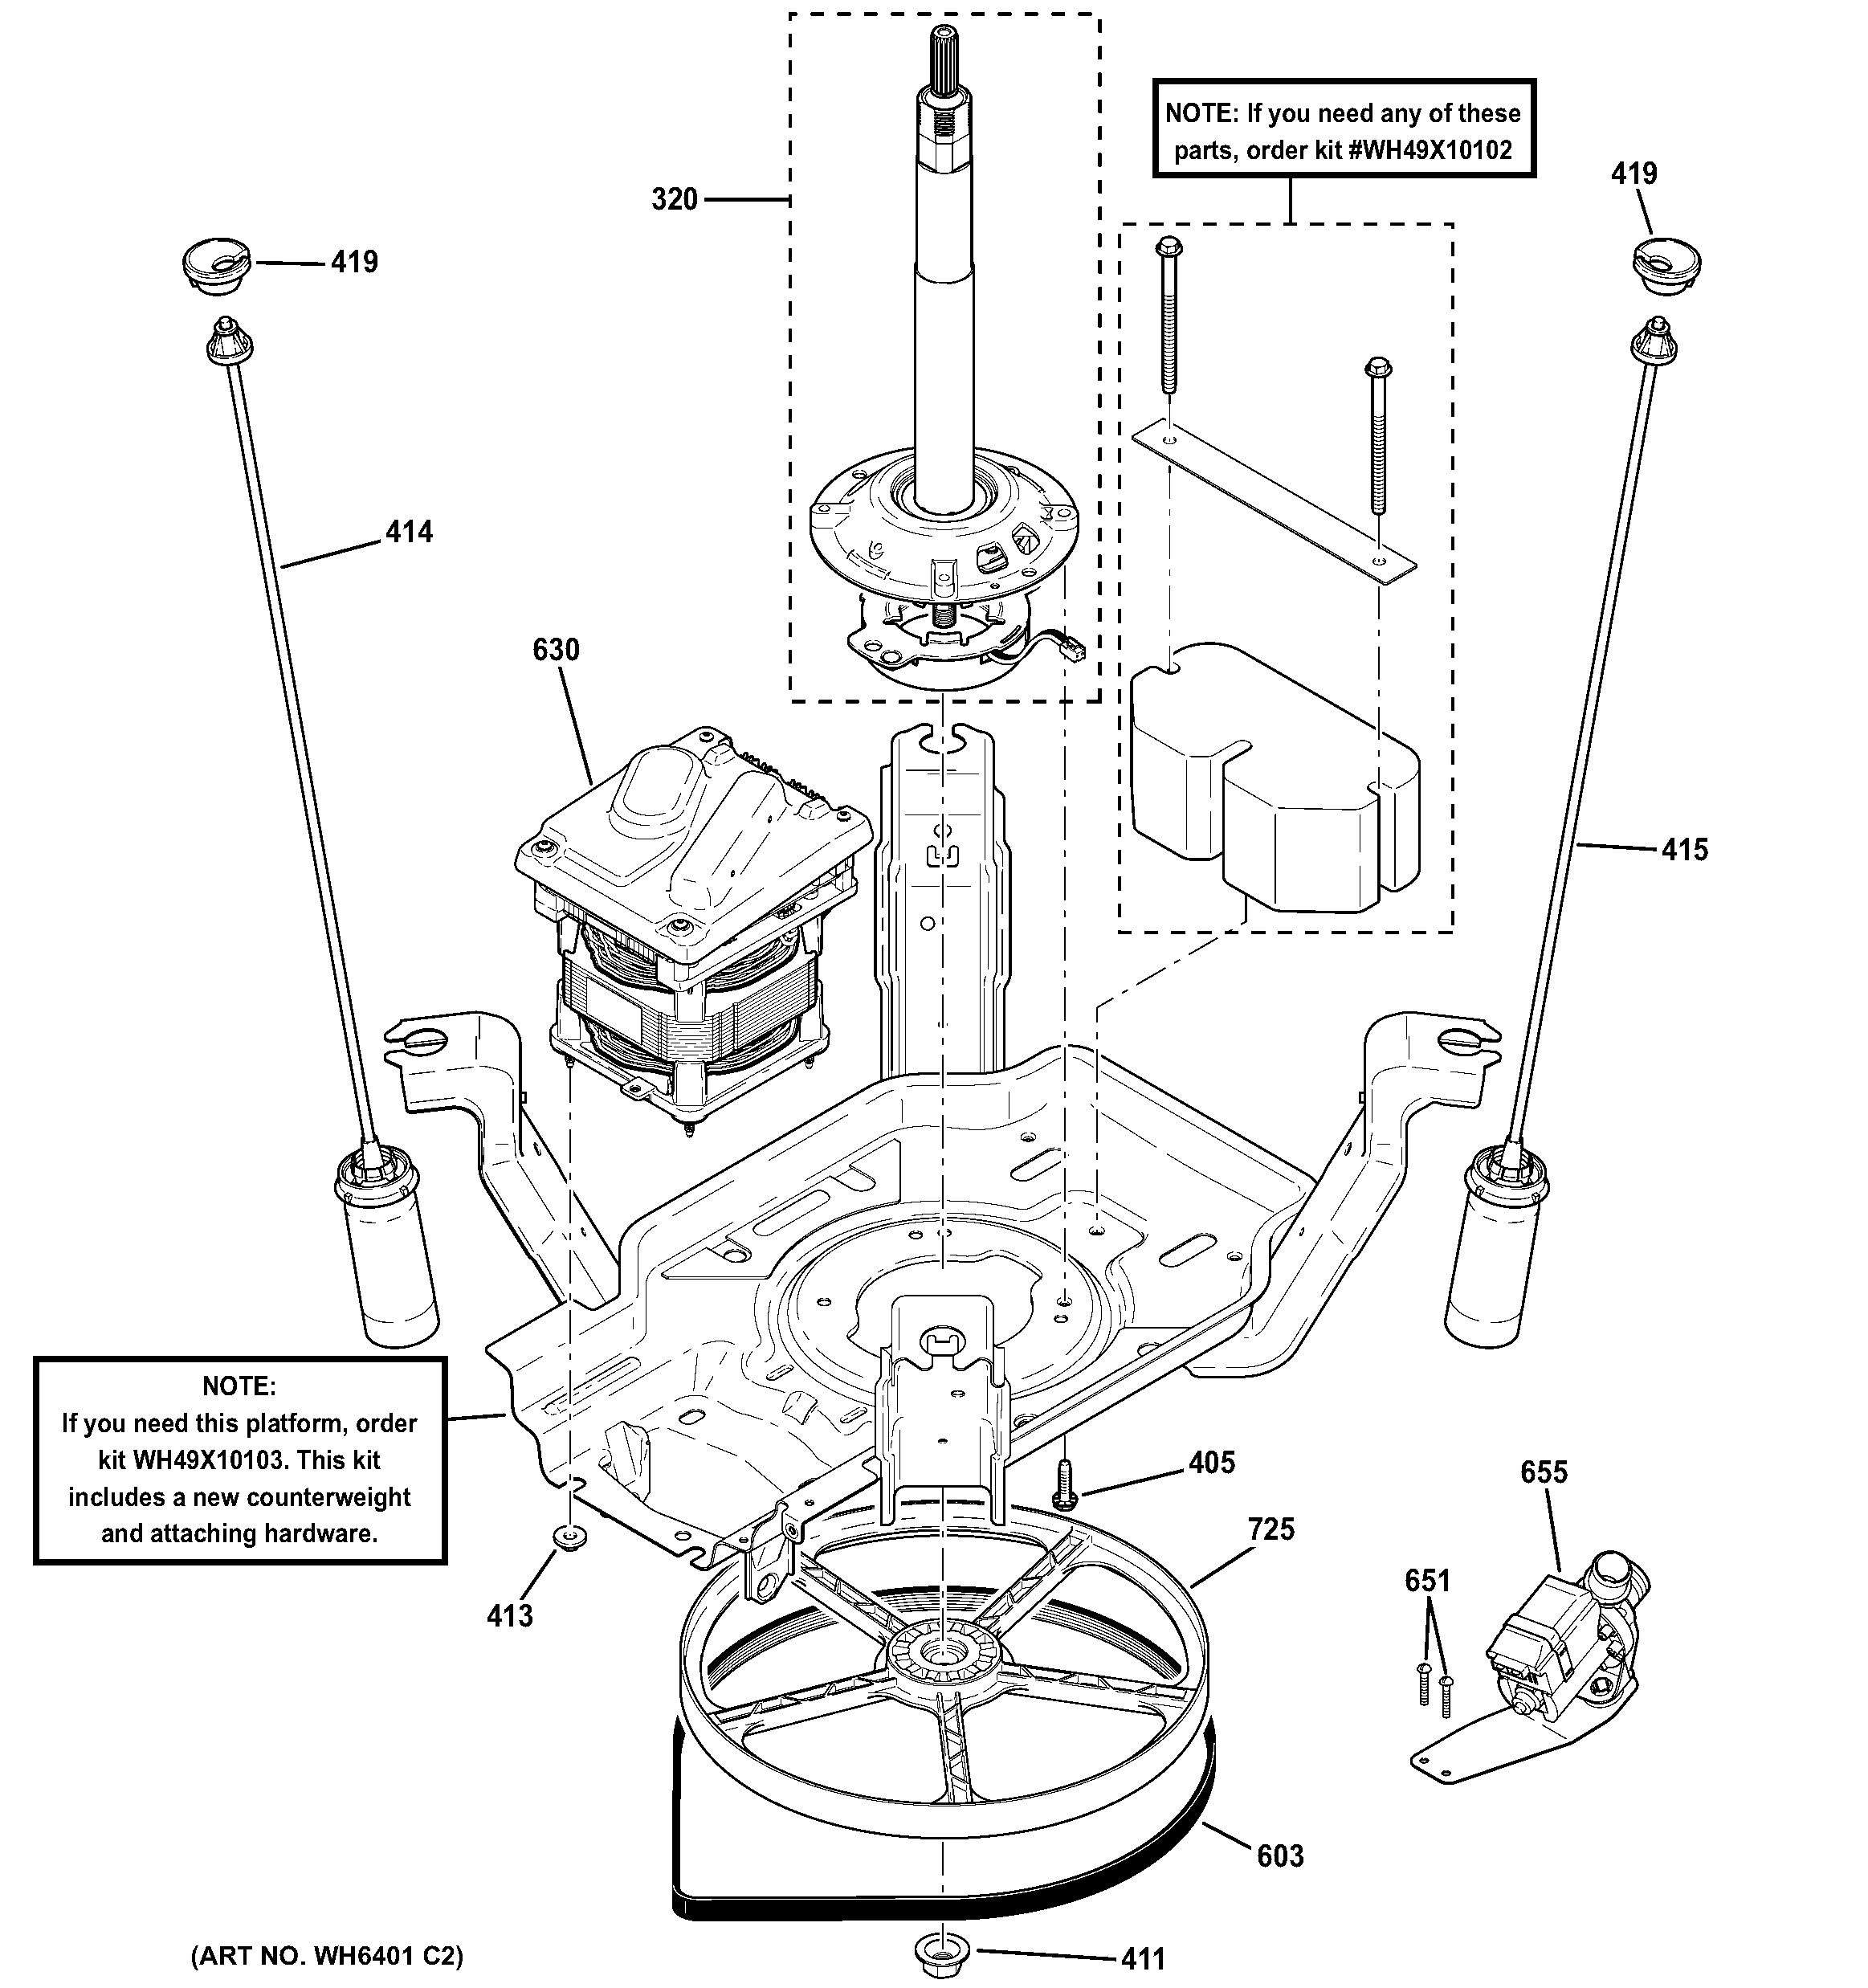 Clutch Parts Diagram Ge Washer Parts Model Gcwn4950d0ws Of Clutch Parts Diagram